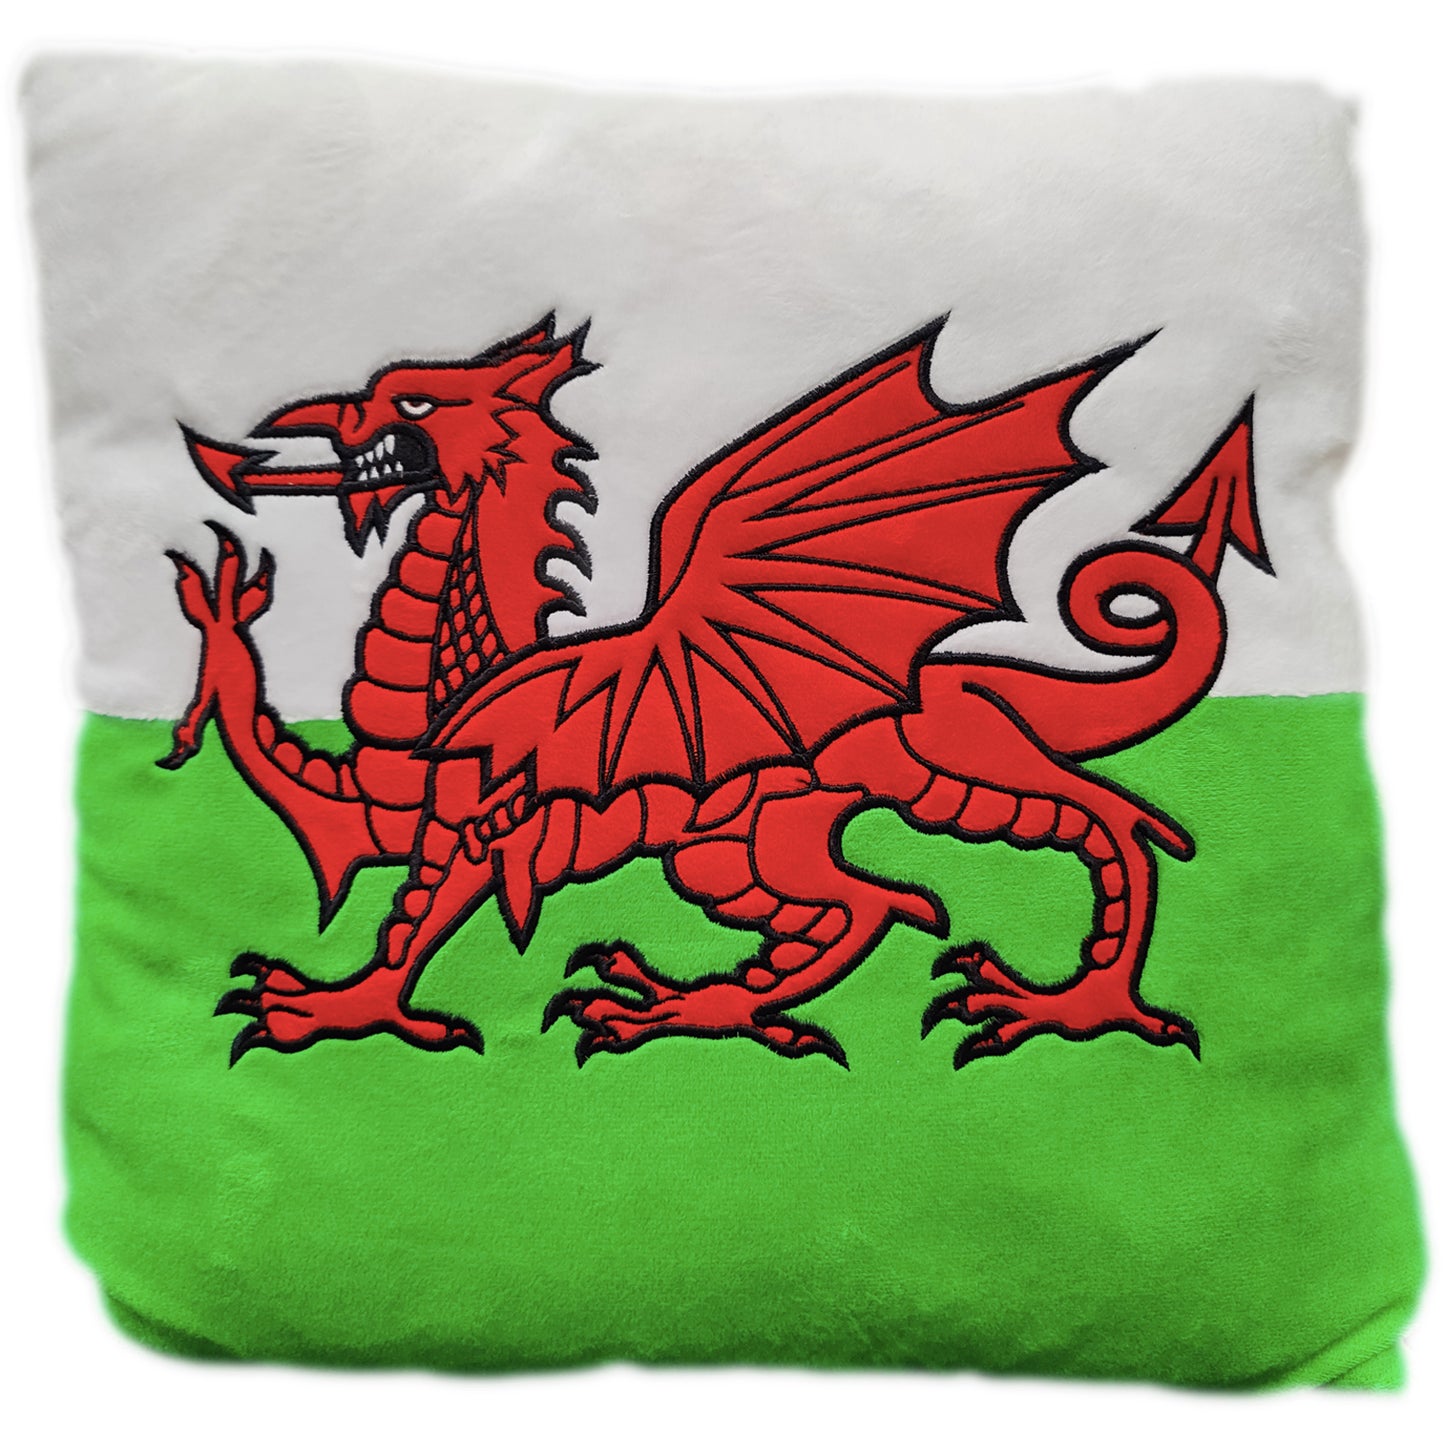 Wales Flag Cushion